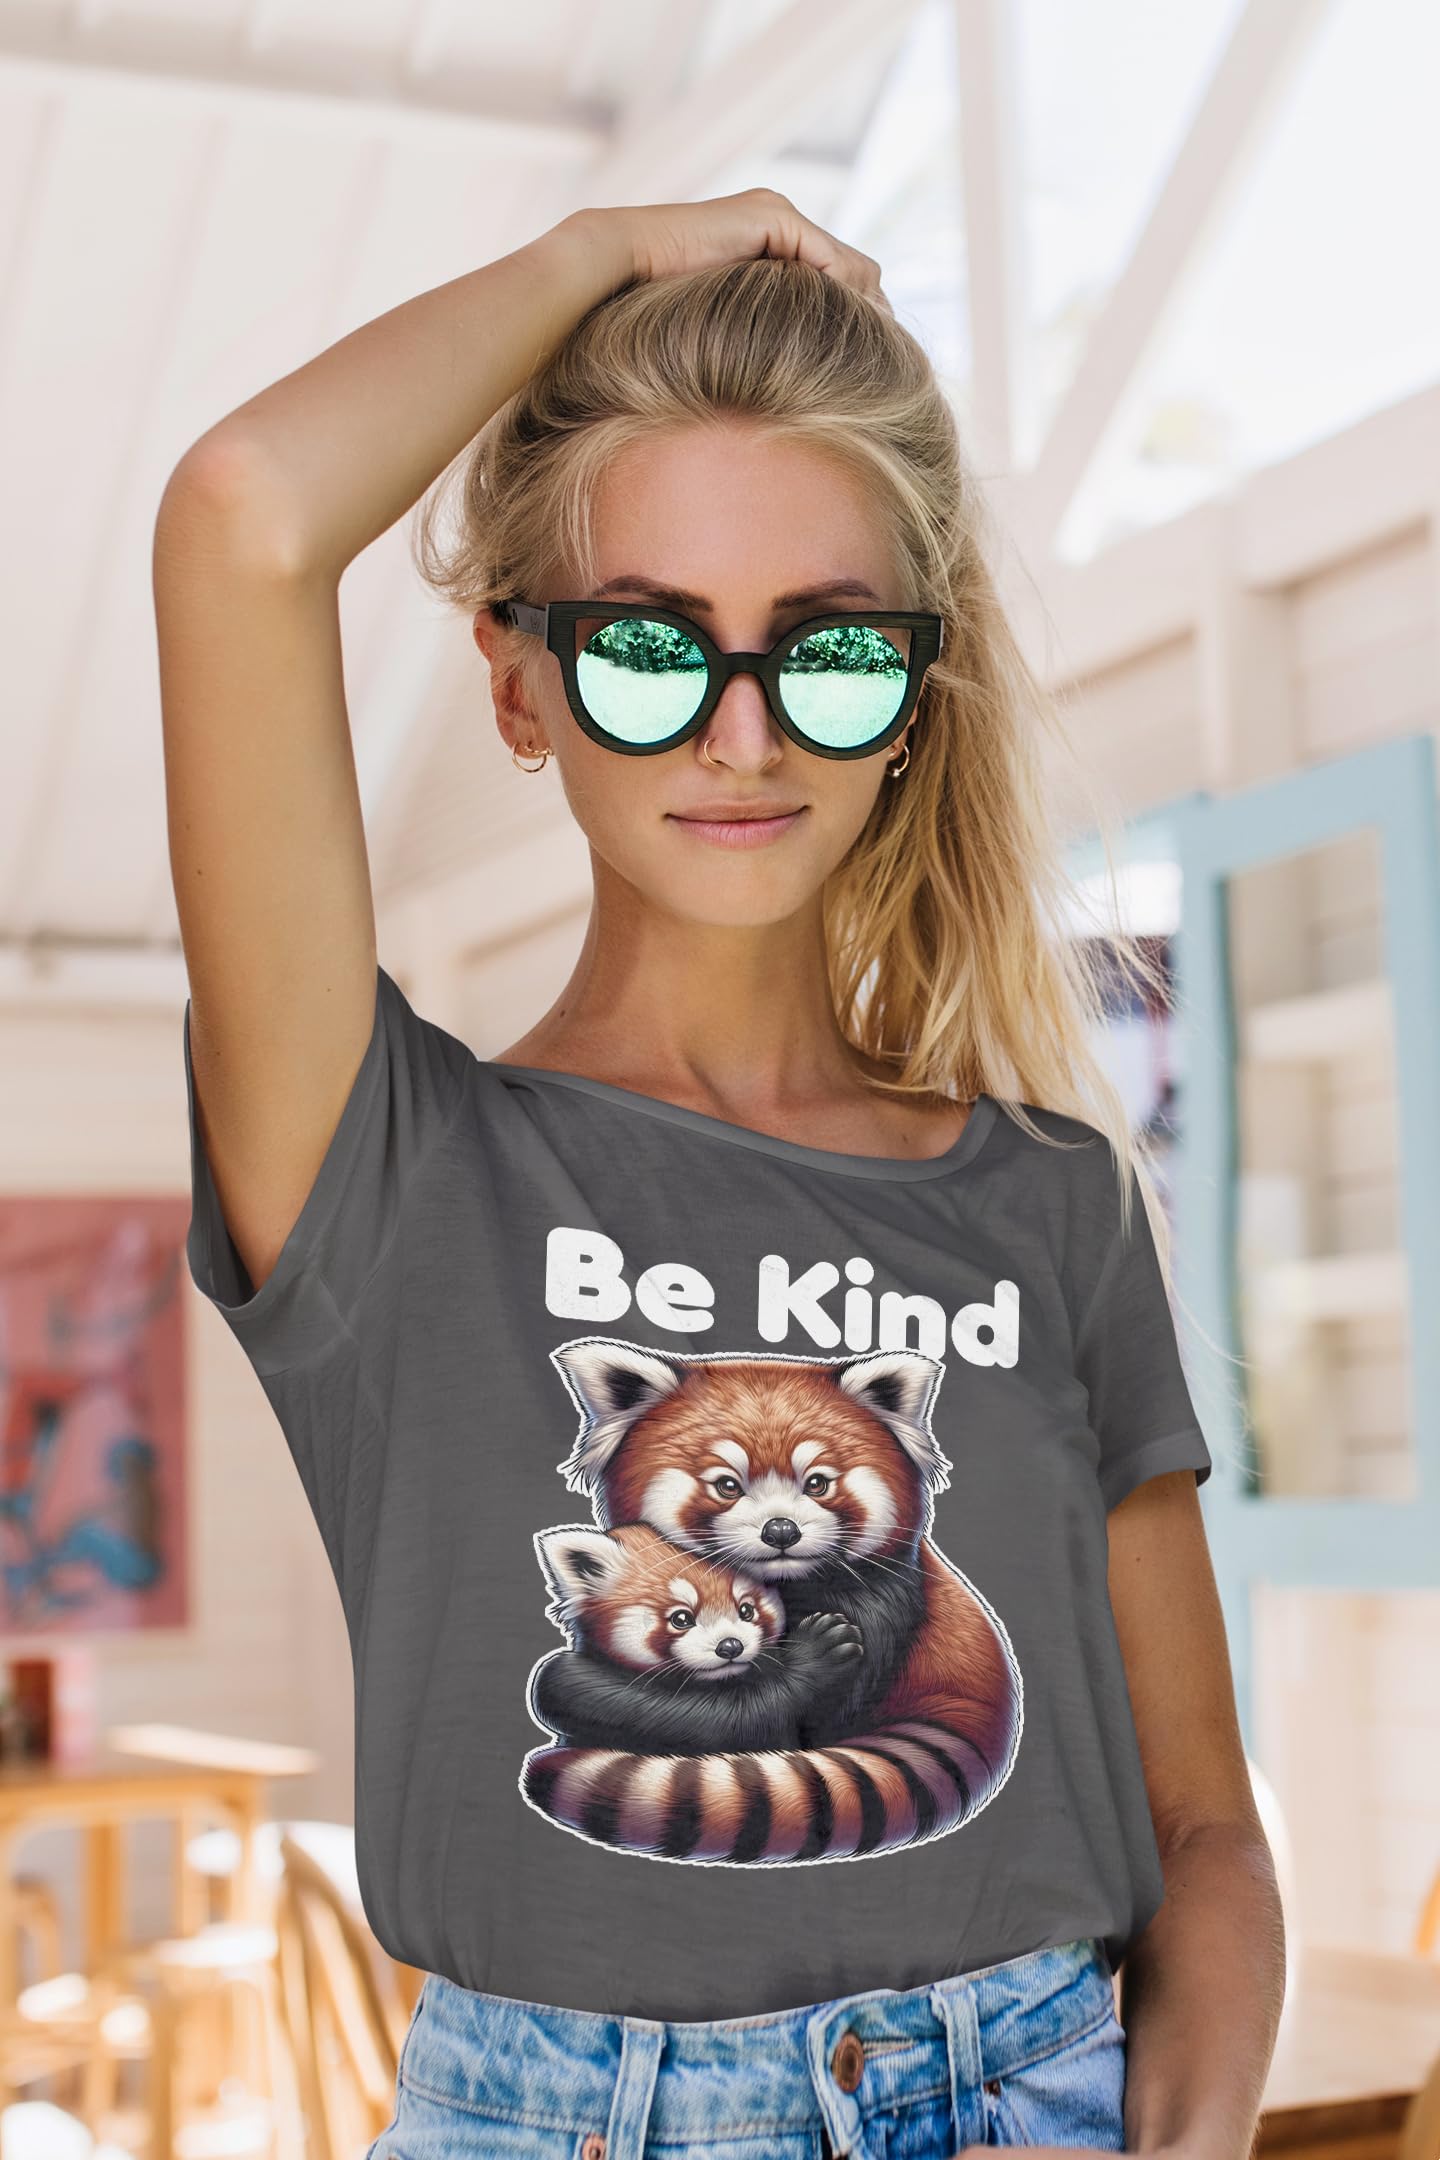 Be Kind Shirt, Red Panda, Kawaii, Cat Bear